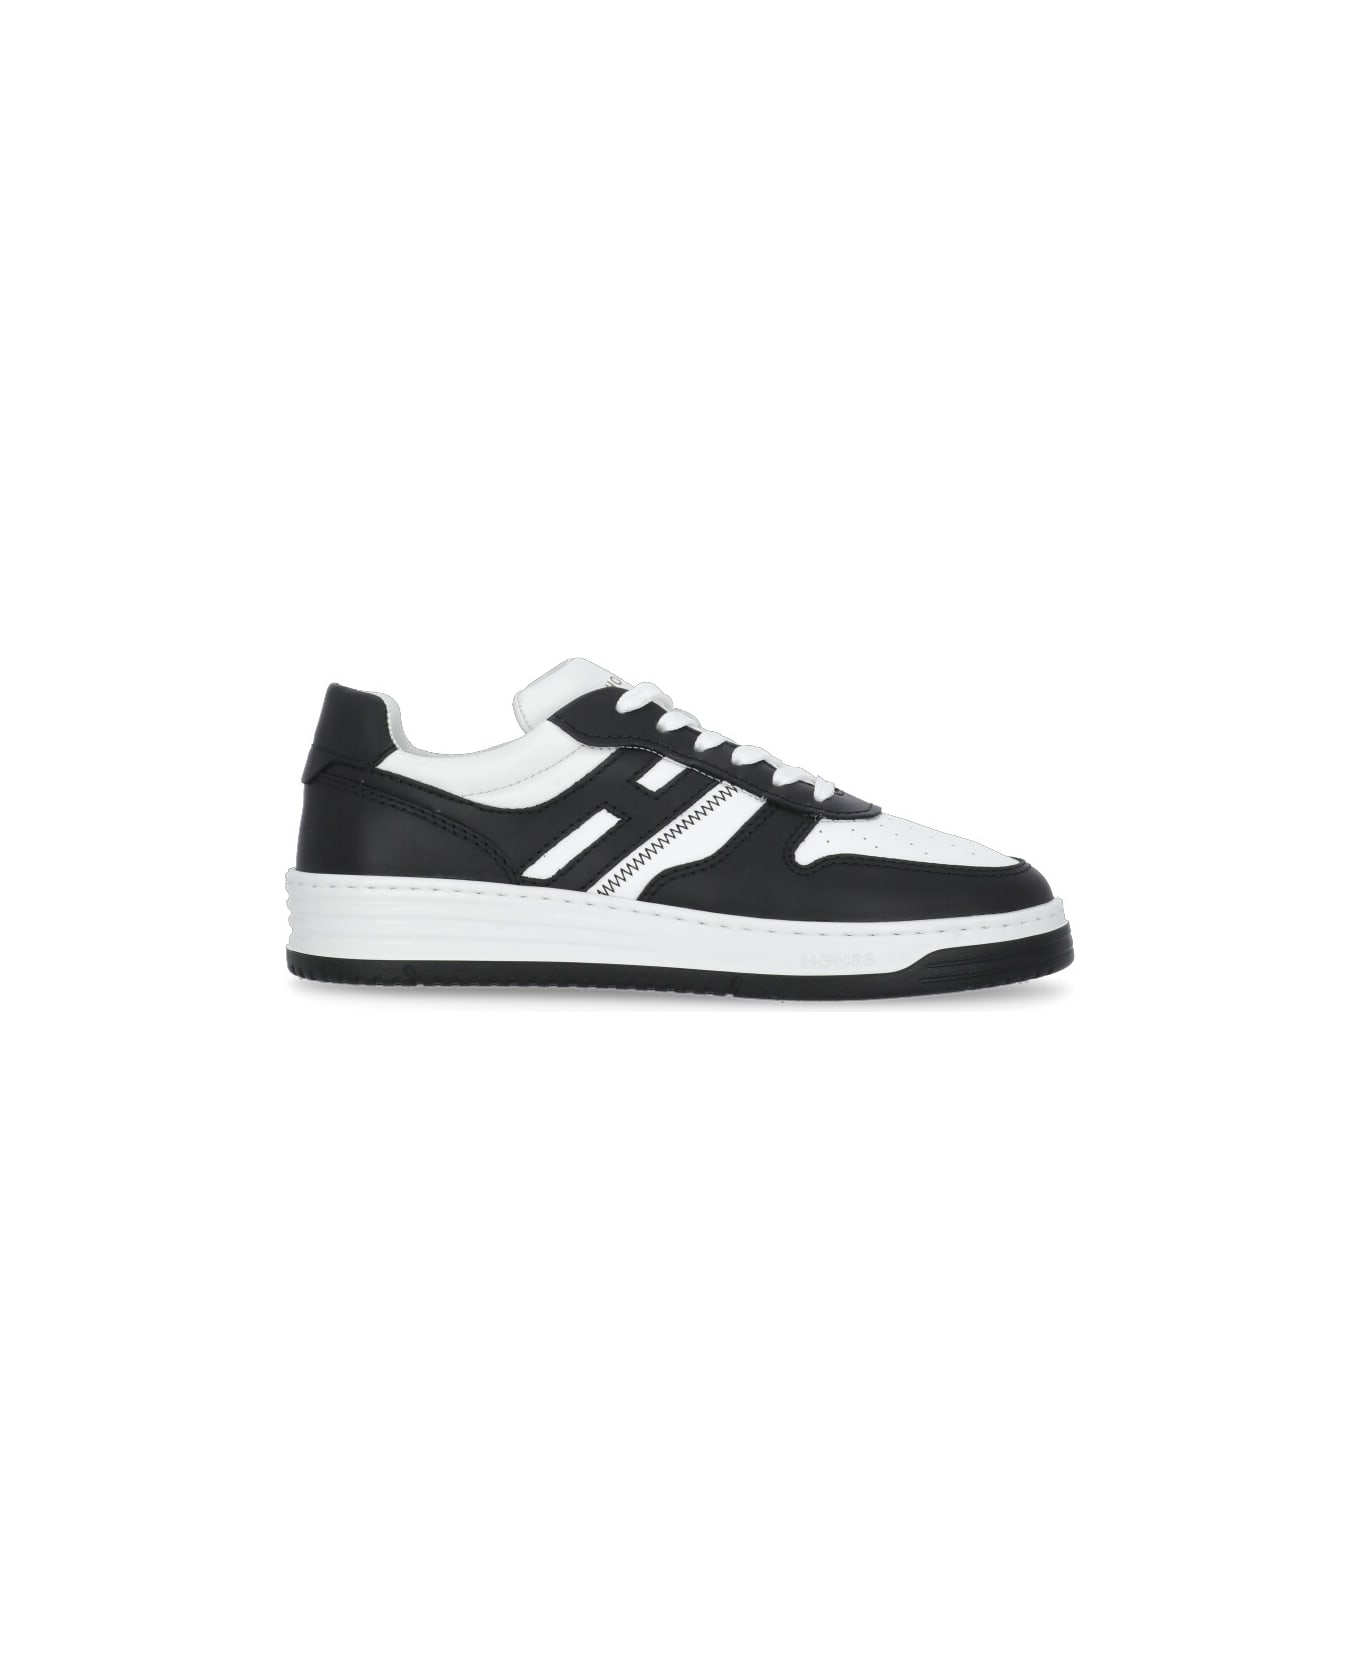 Hogan H630 Sneakers - White/black